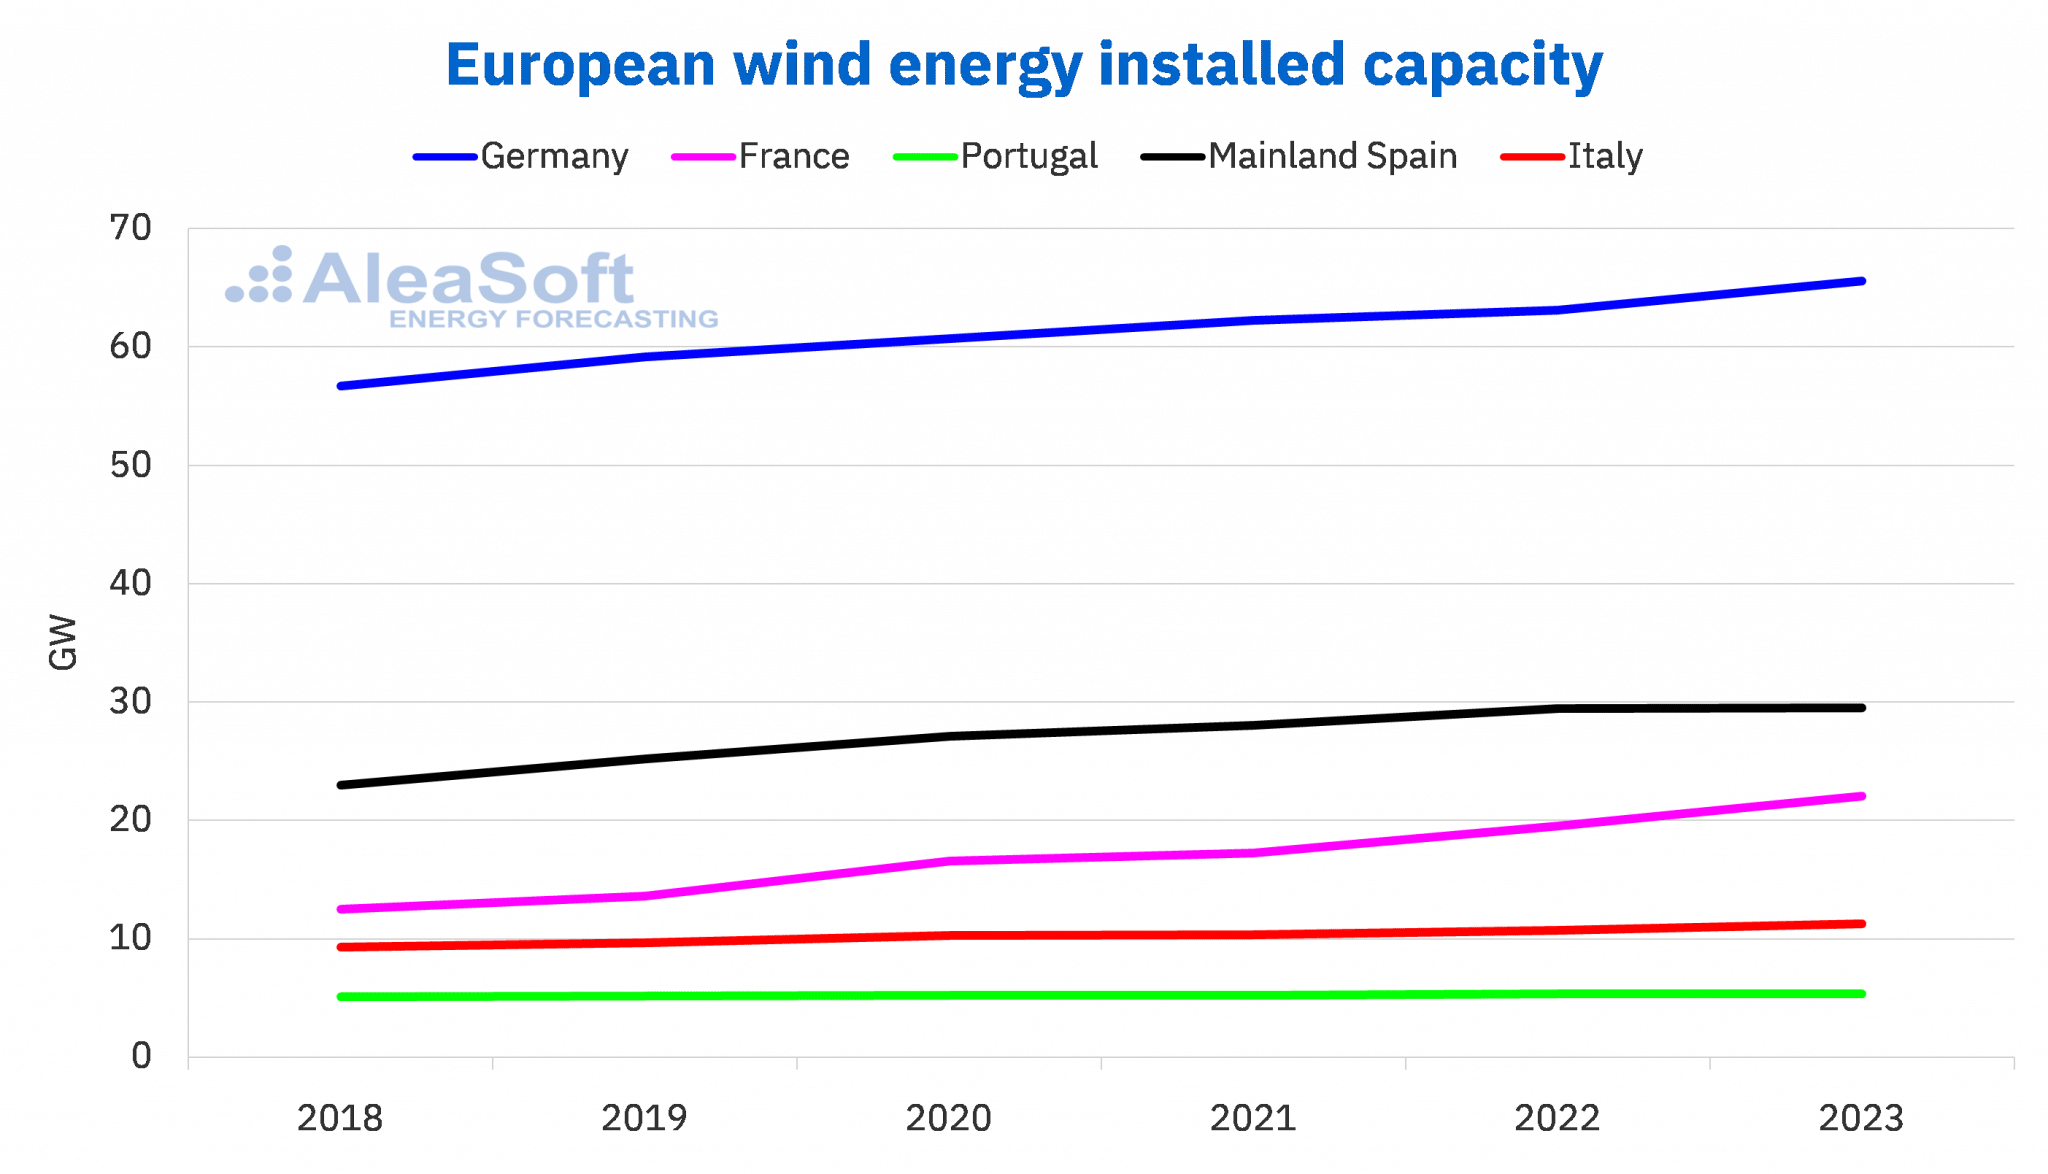 AleaSoft - european wind energy installed capacity